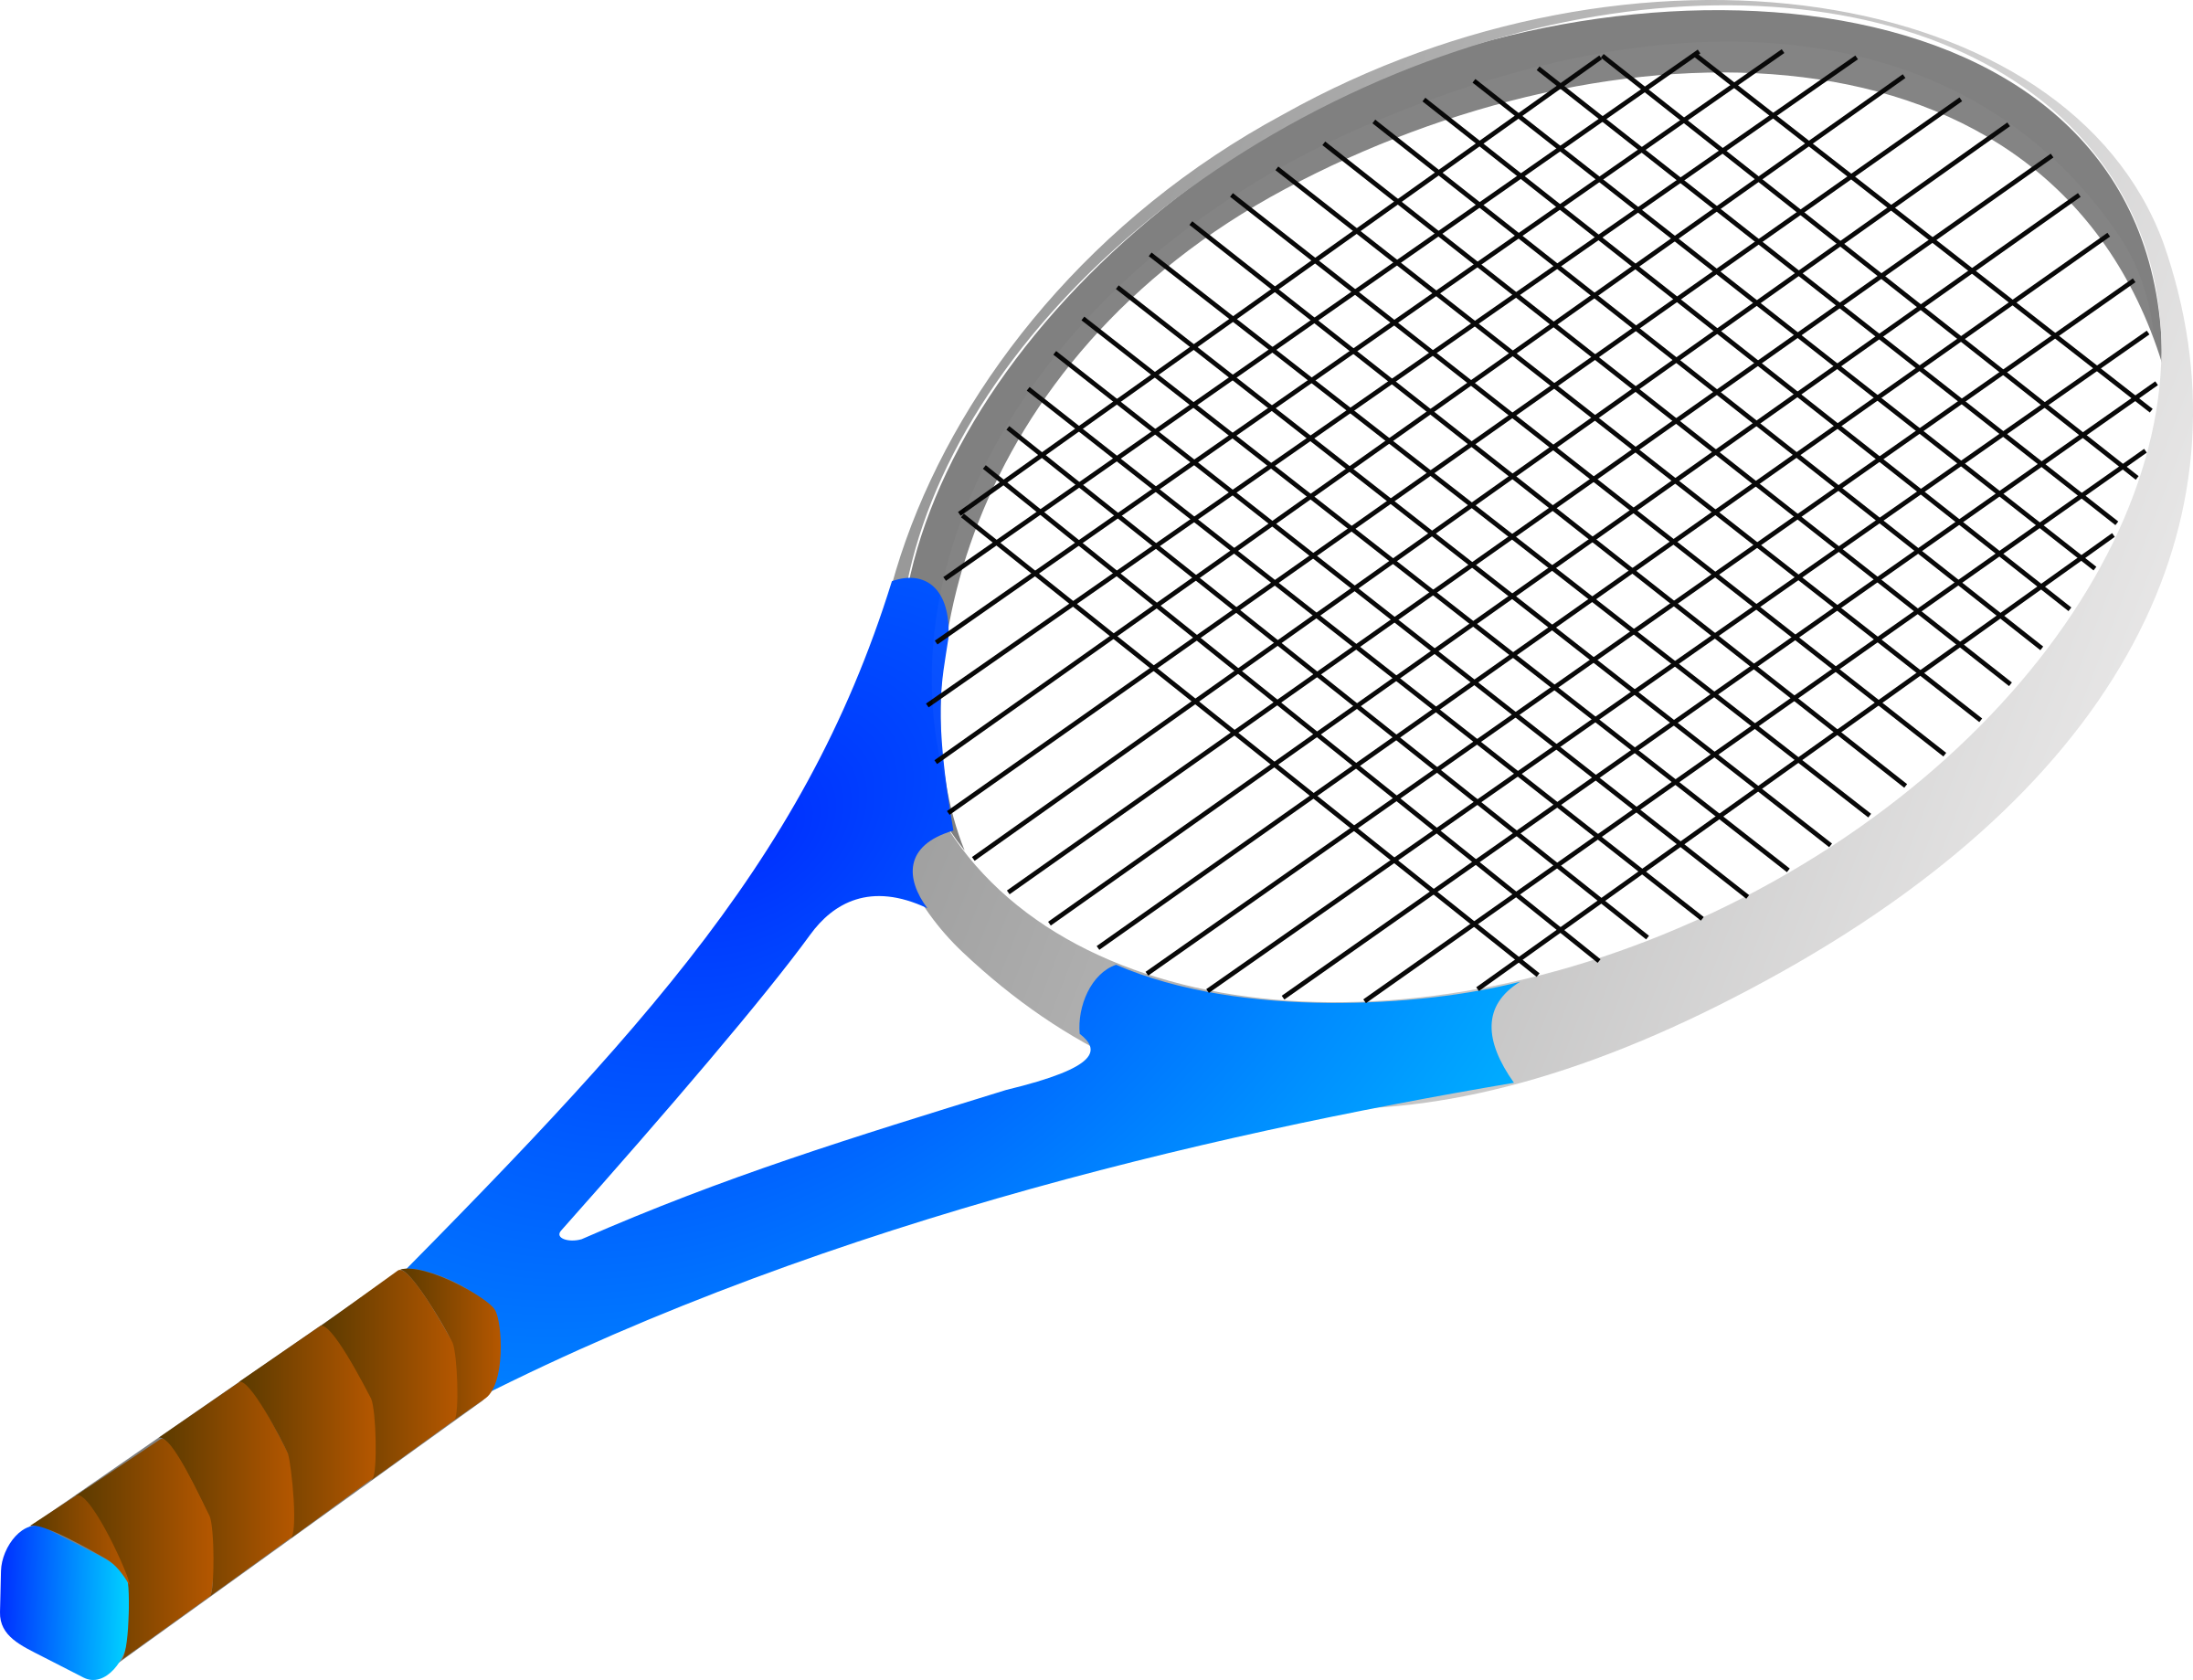 Raquette de tennis